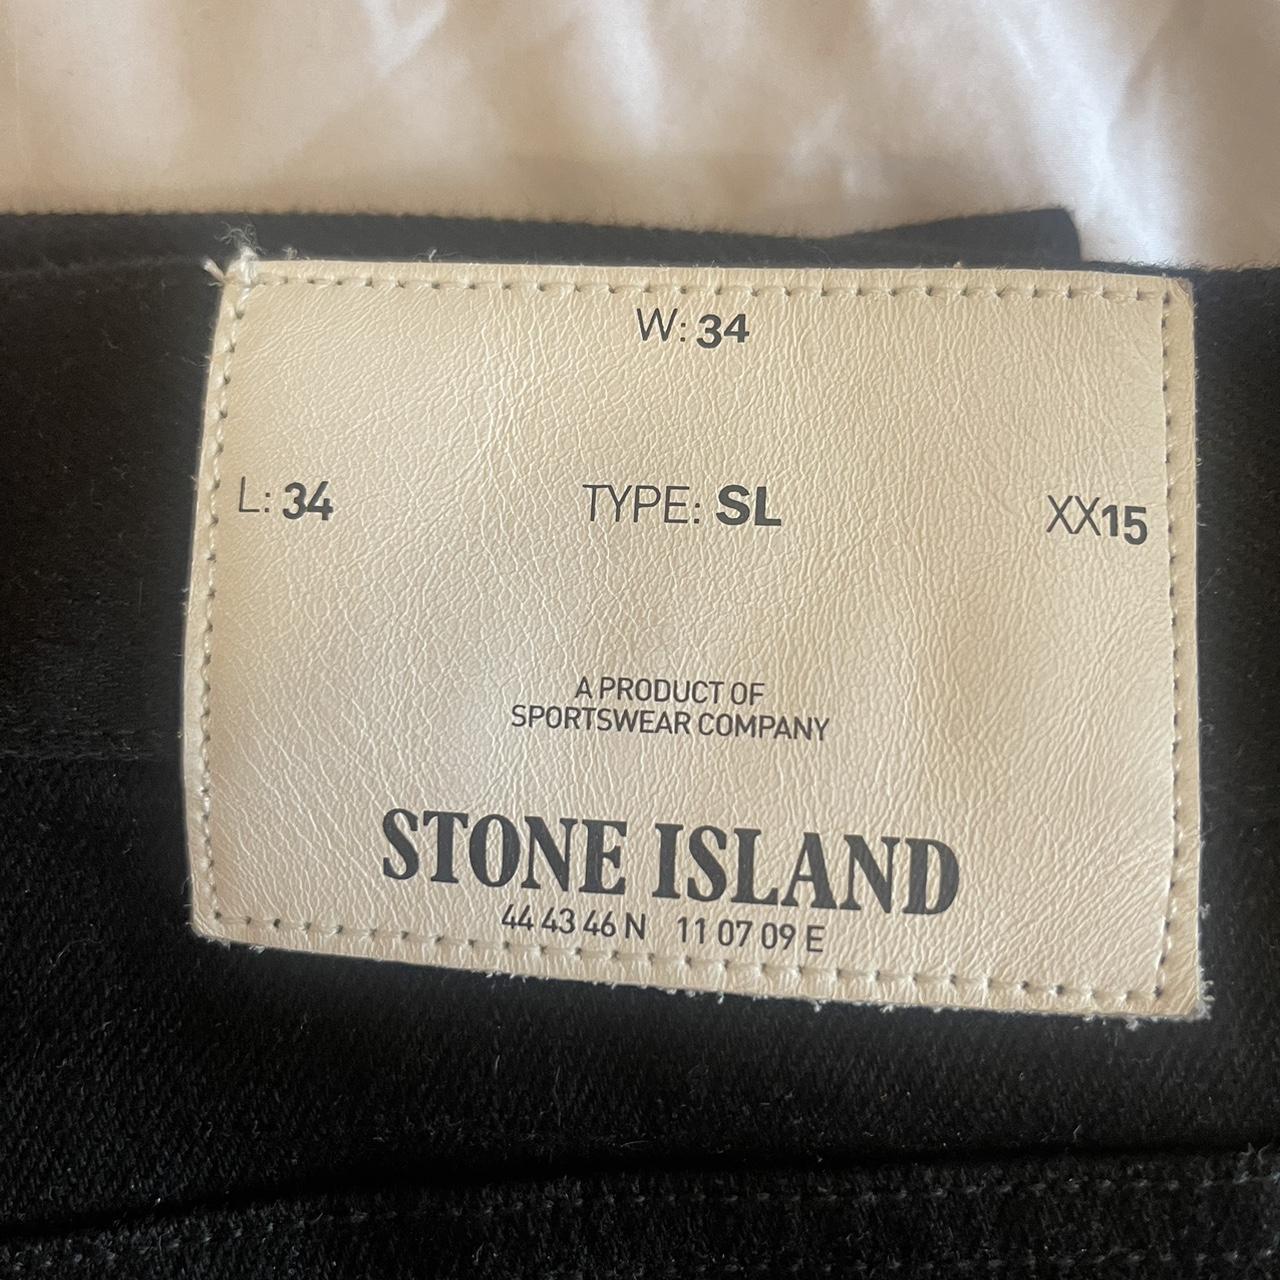 Stone Island - Straight Leg (SL) - Denim Jeans -... - Depop